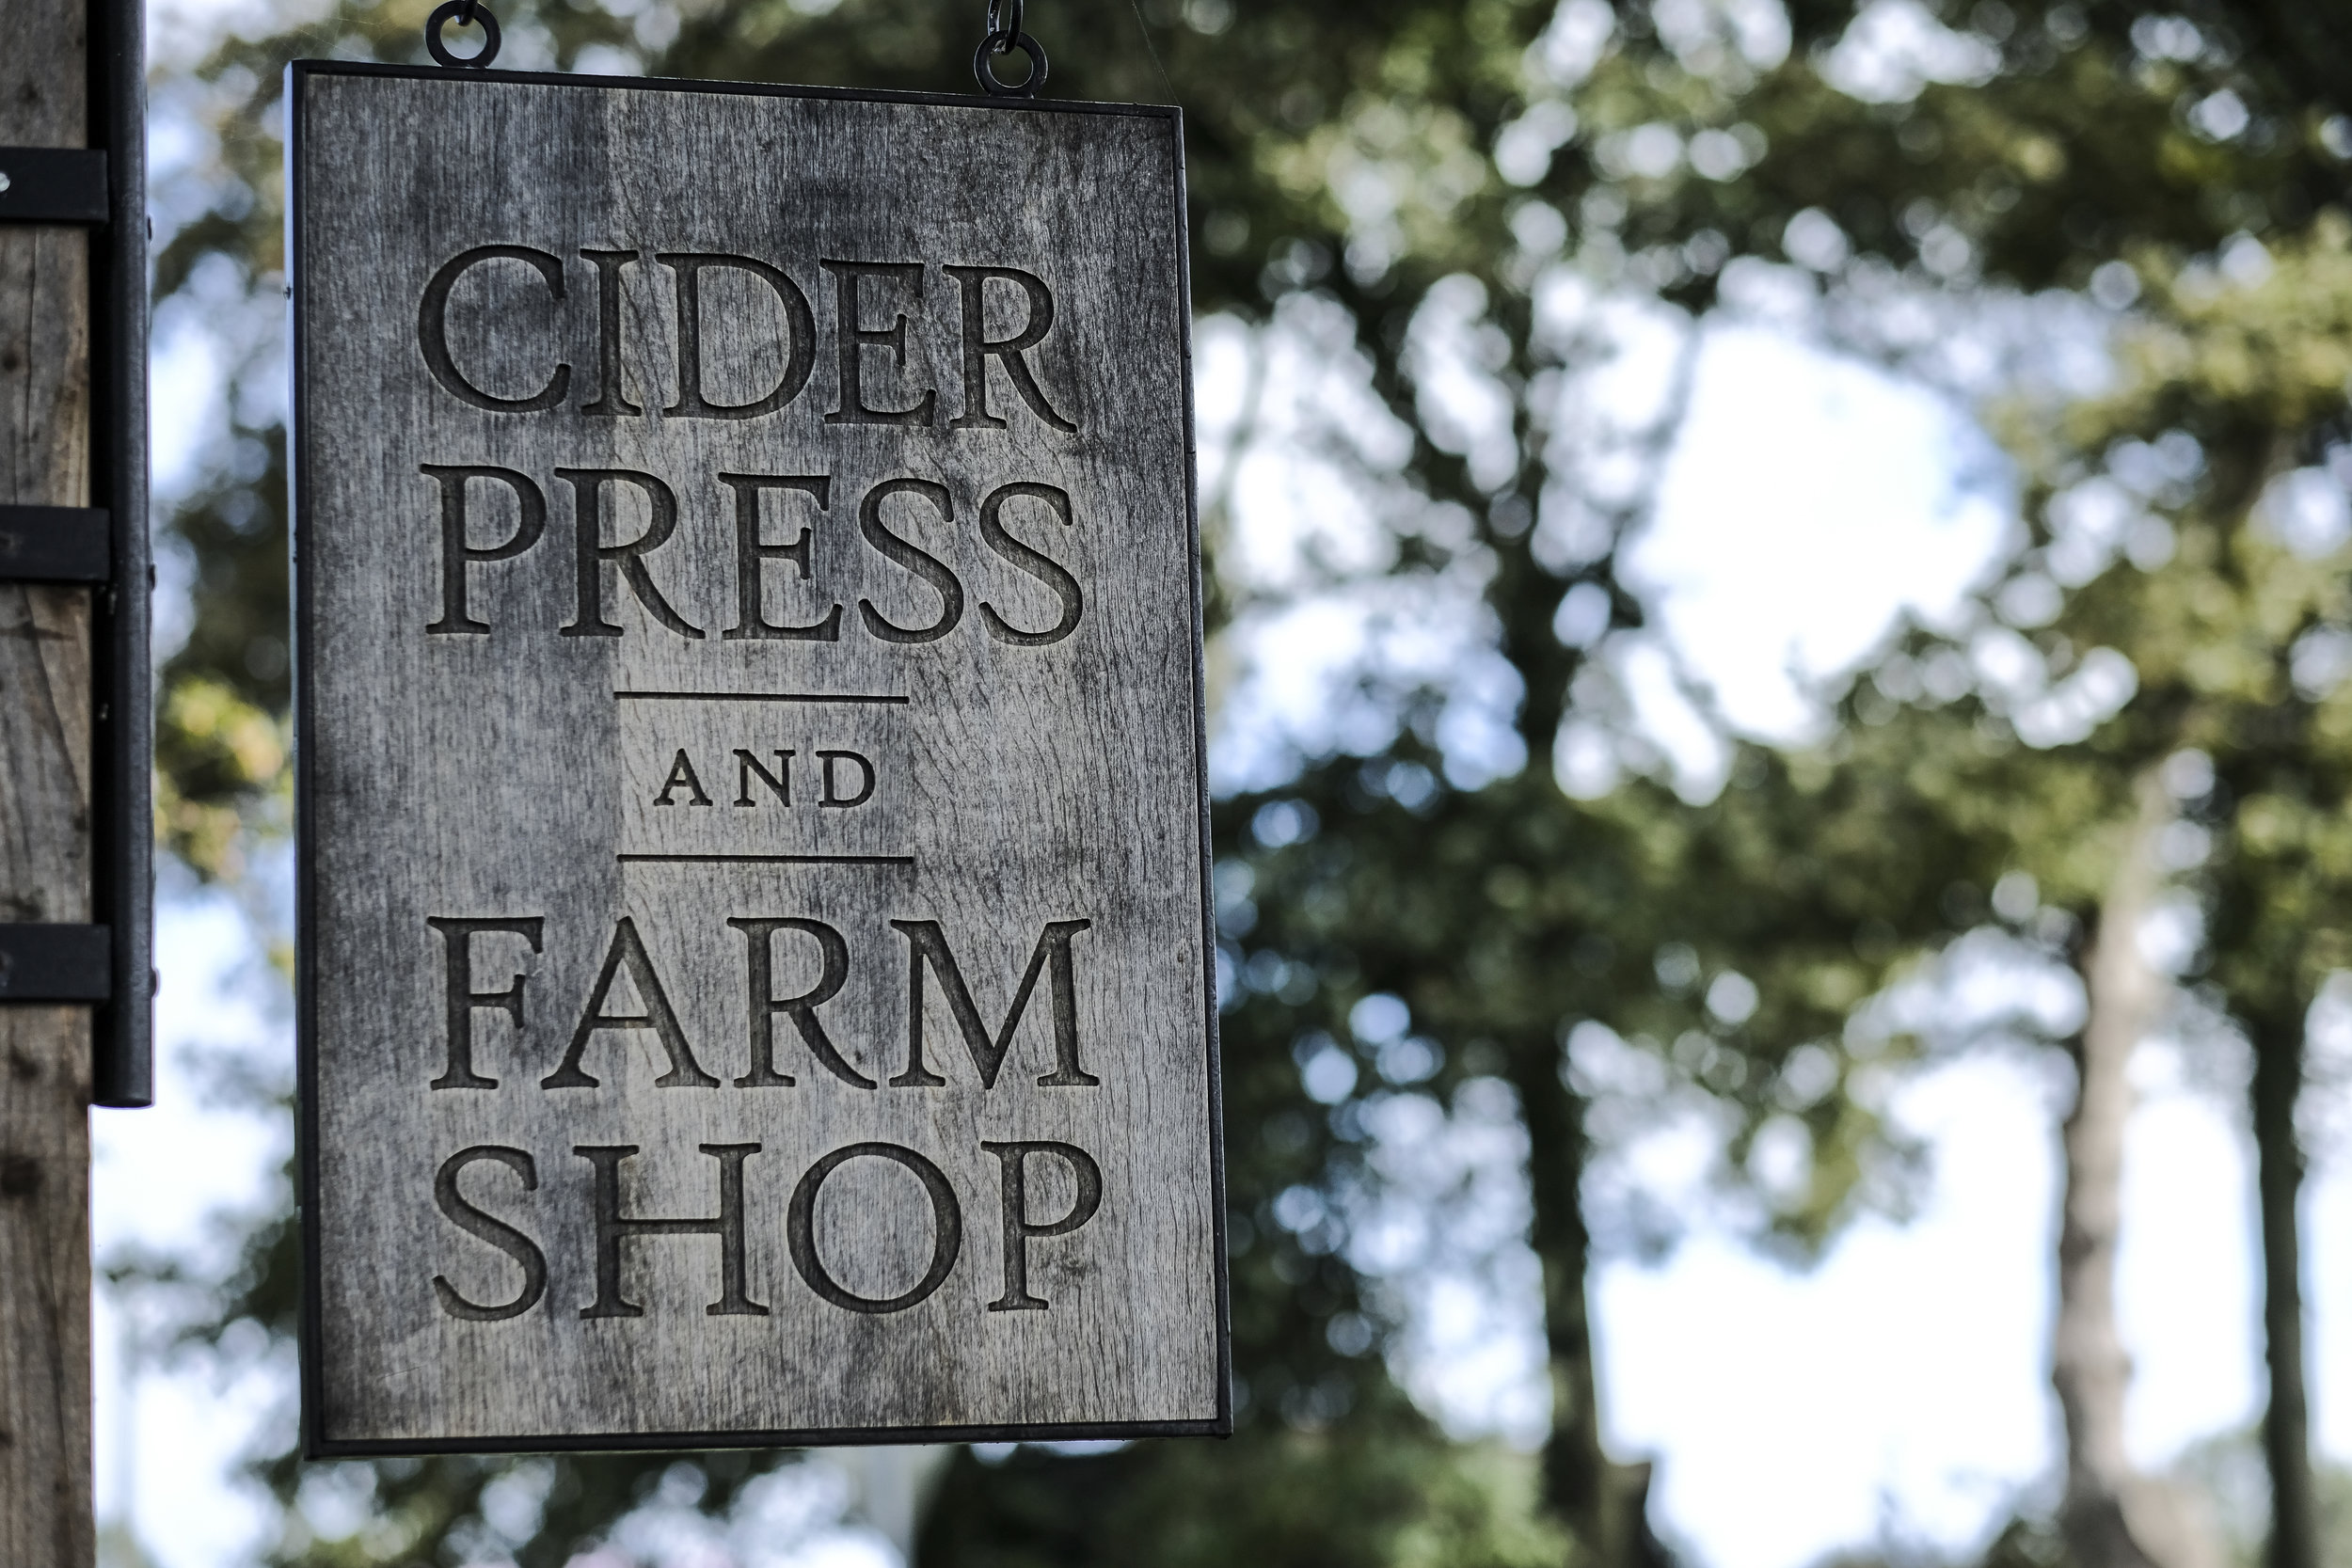 Press Then Press Cider Shop - A Better Way to Buy Cider – Press